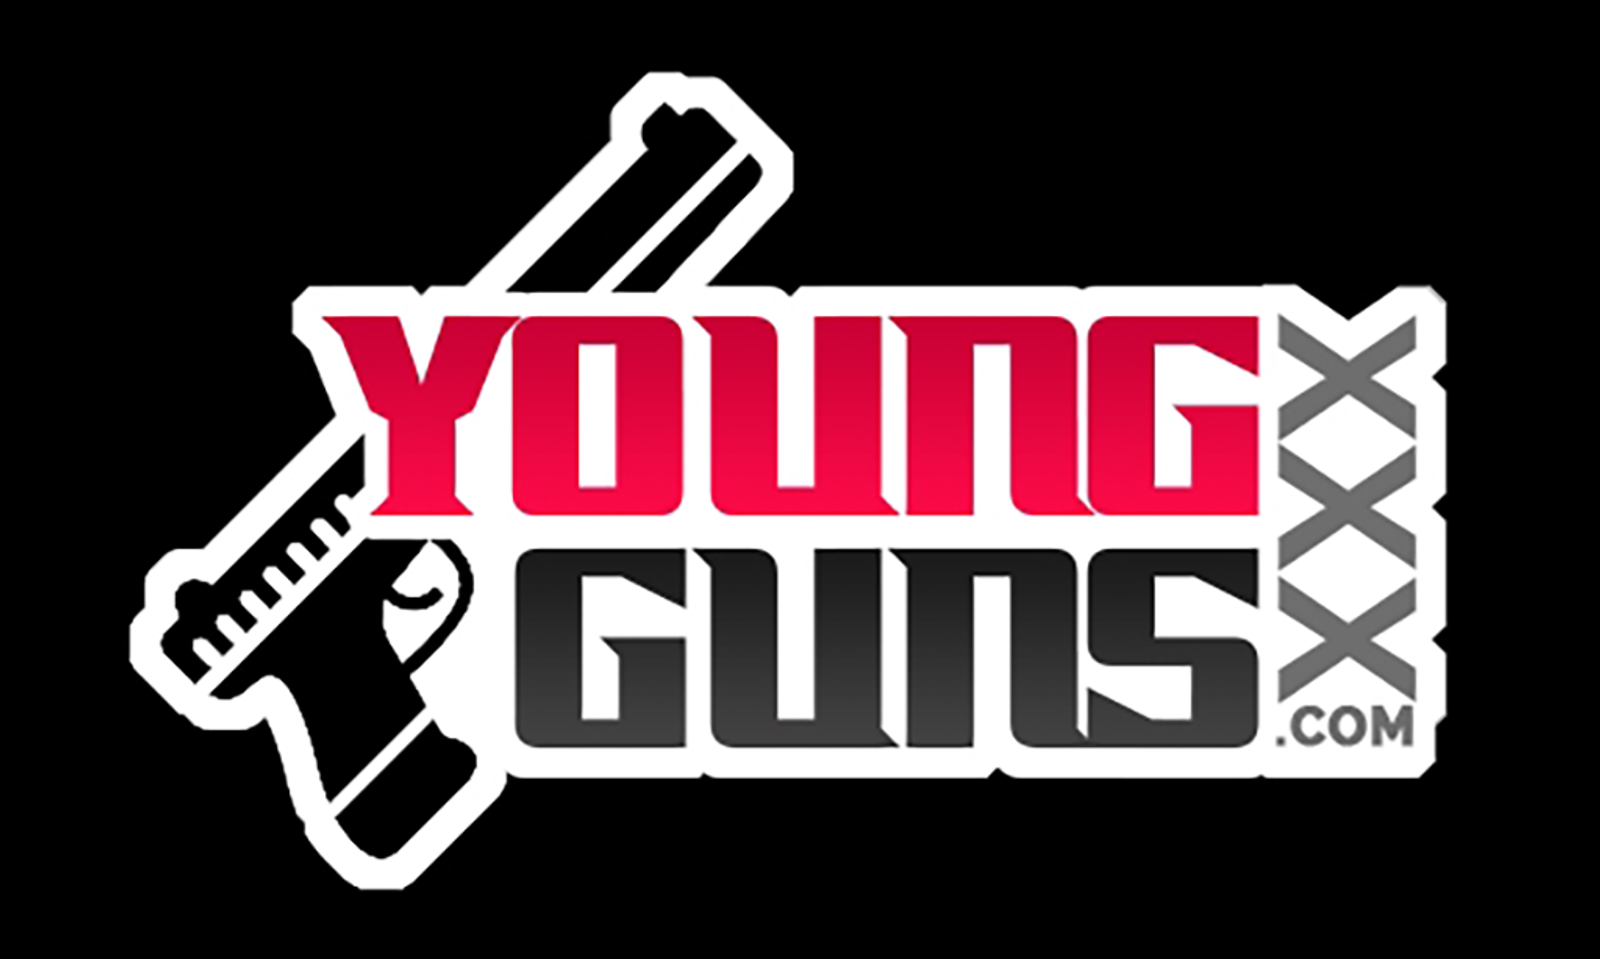 Yummygirl.com Launches Hardcore Site YoungGunsXXX.com